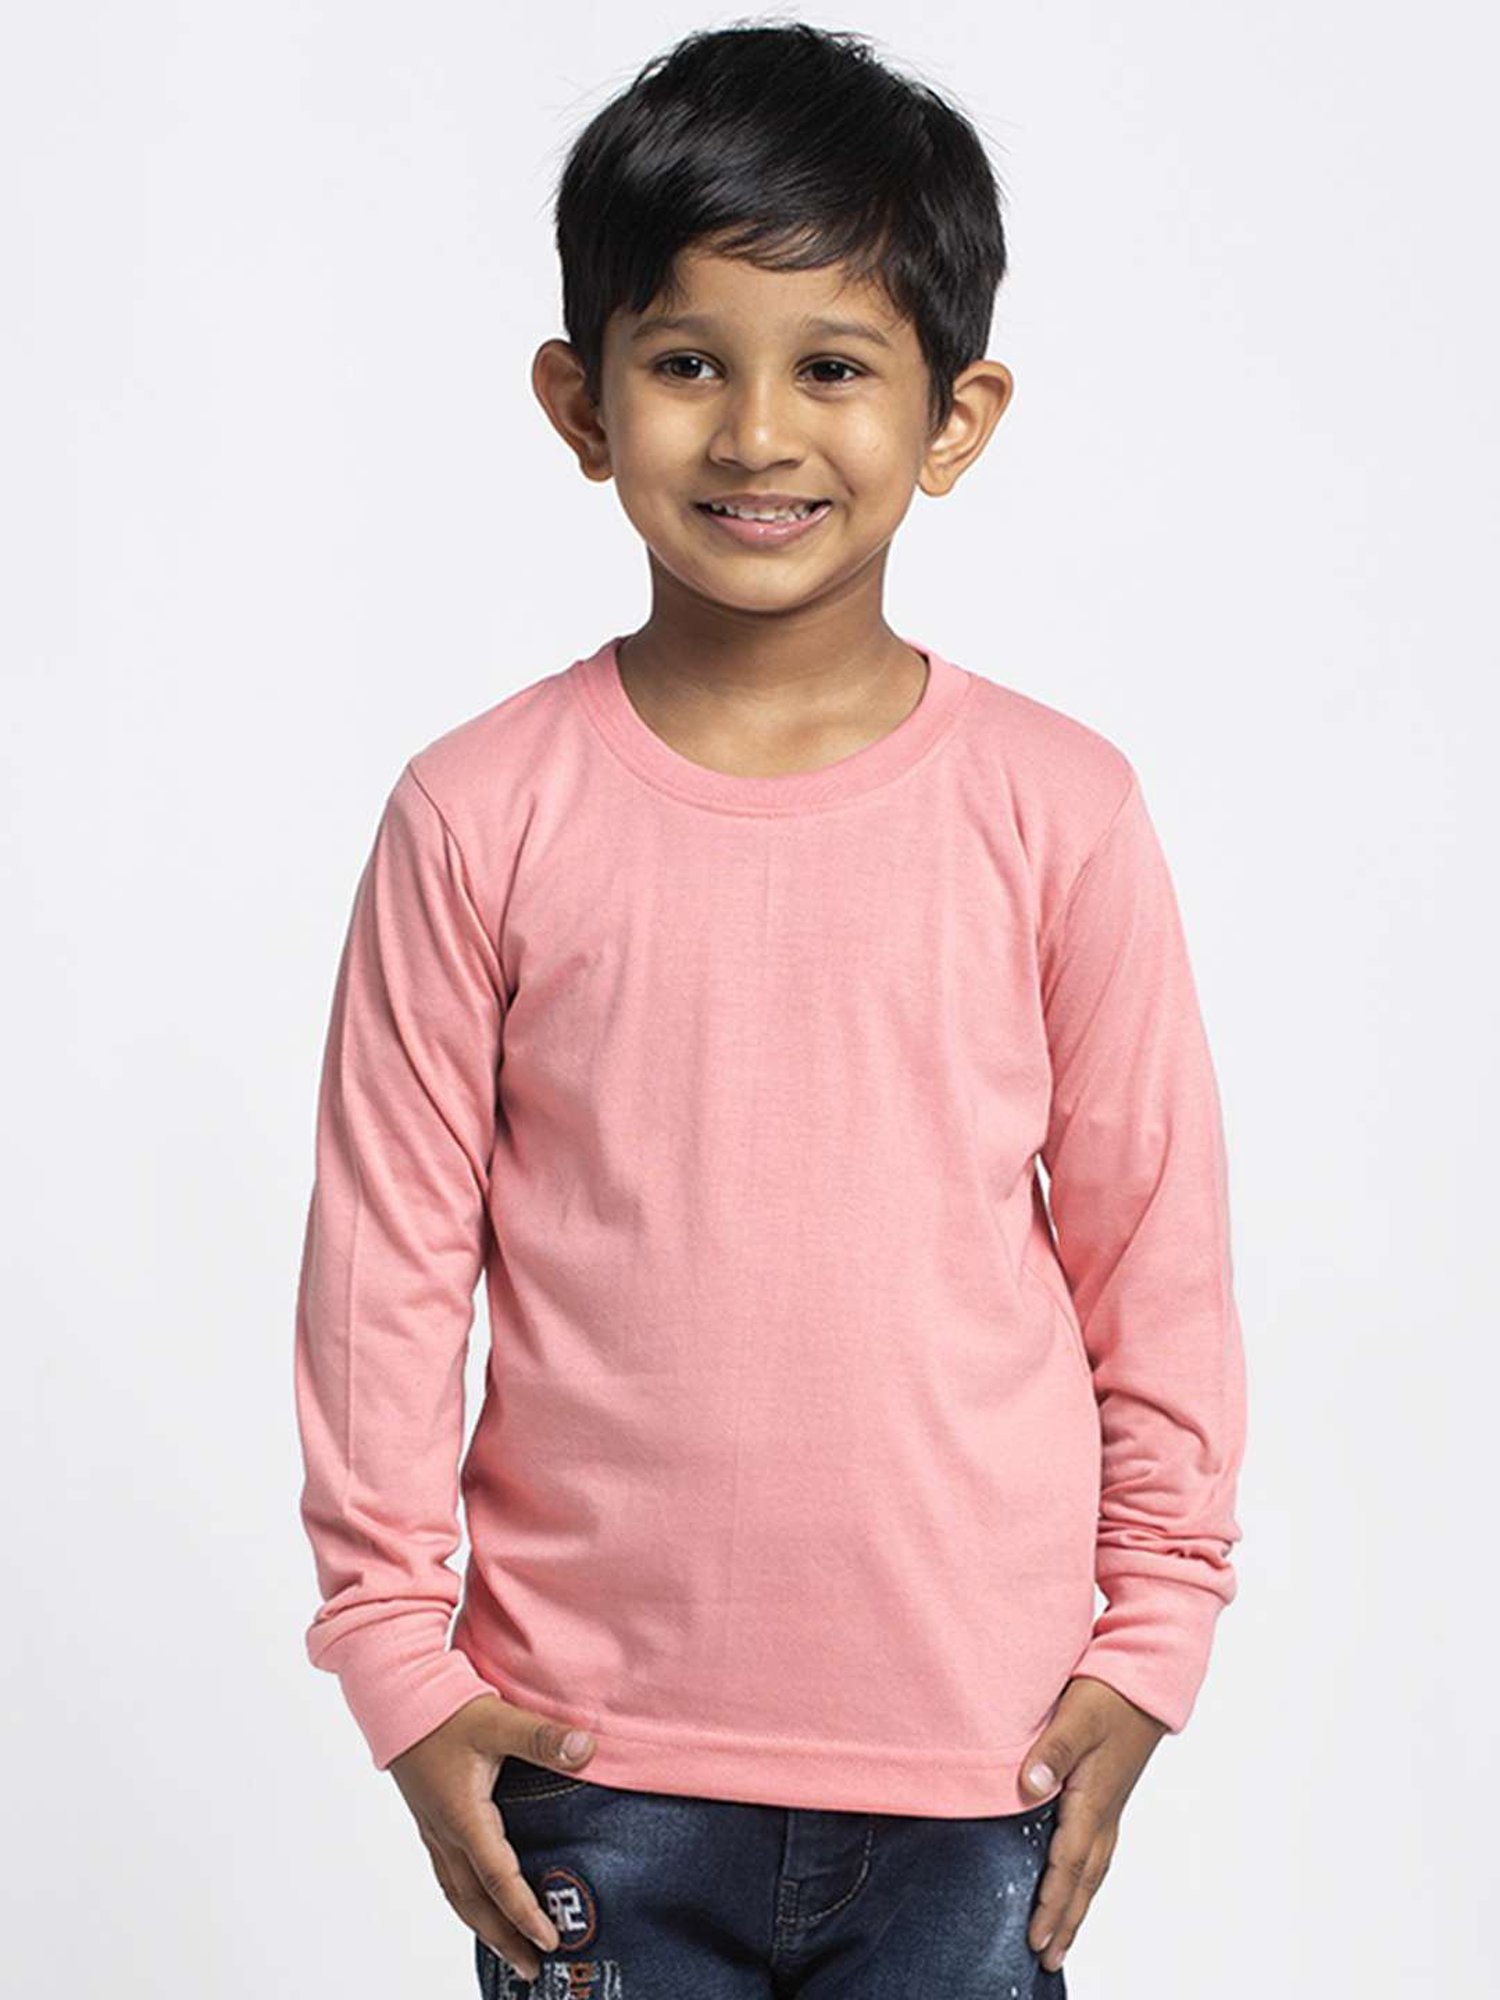 Round T shirt Kids Pink